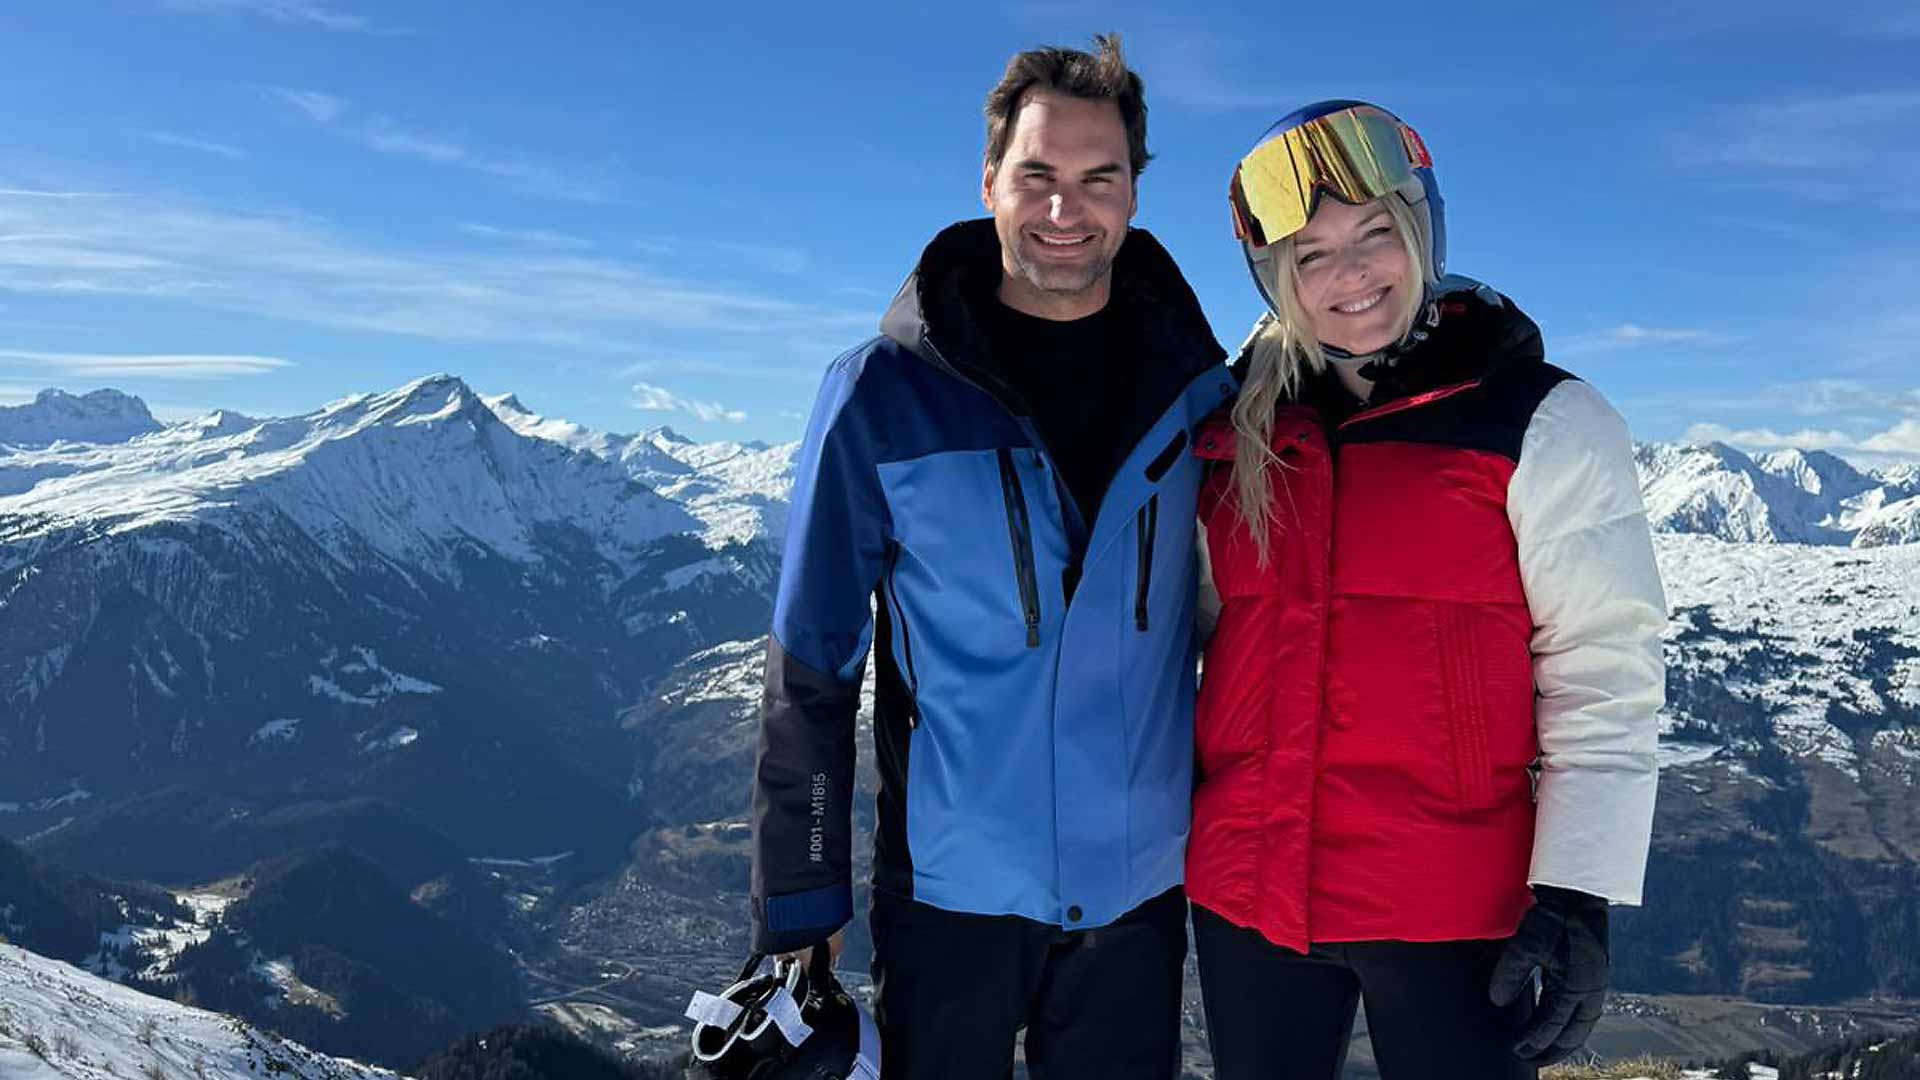 Roger Federer and Lindsey Vonn hit the slopes together for the first time.